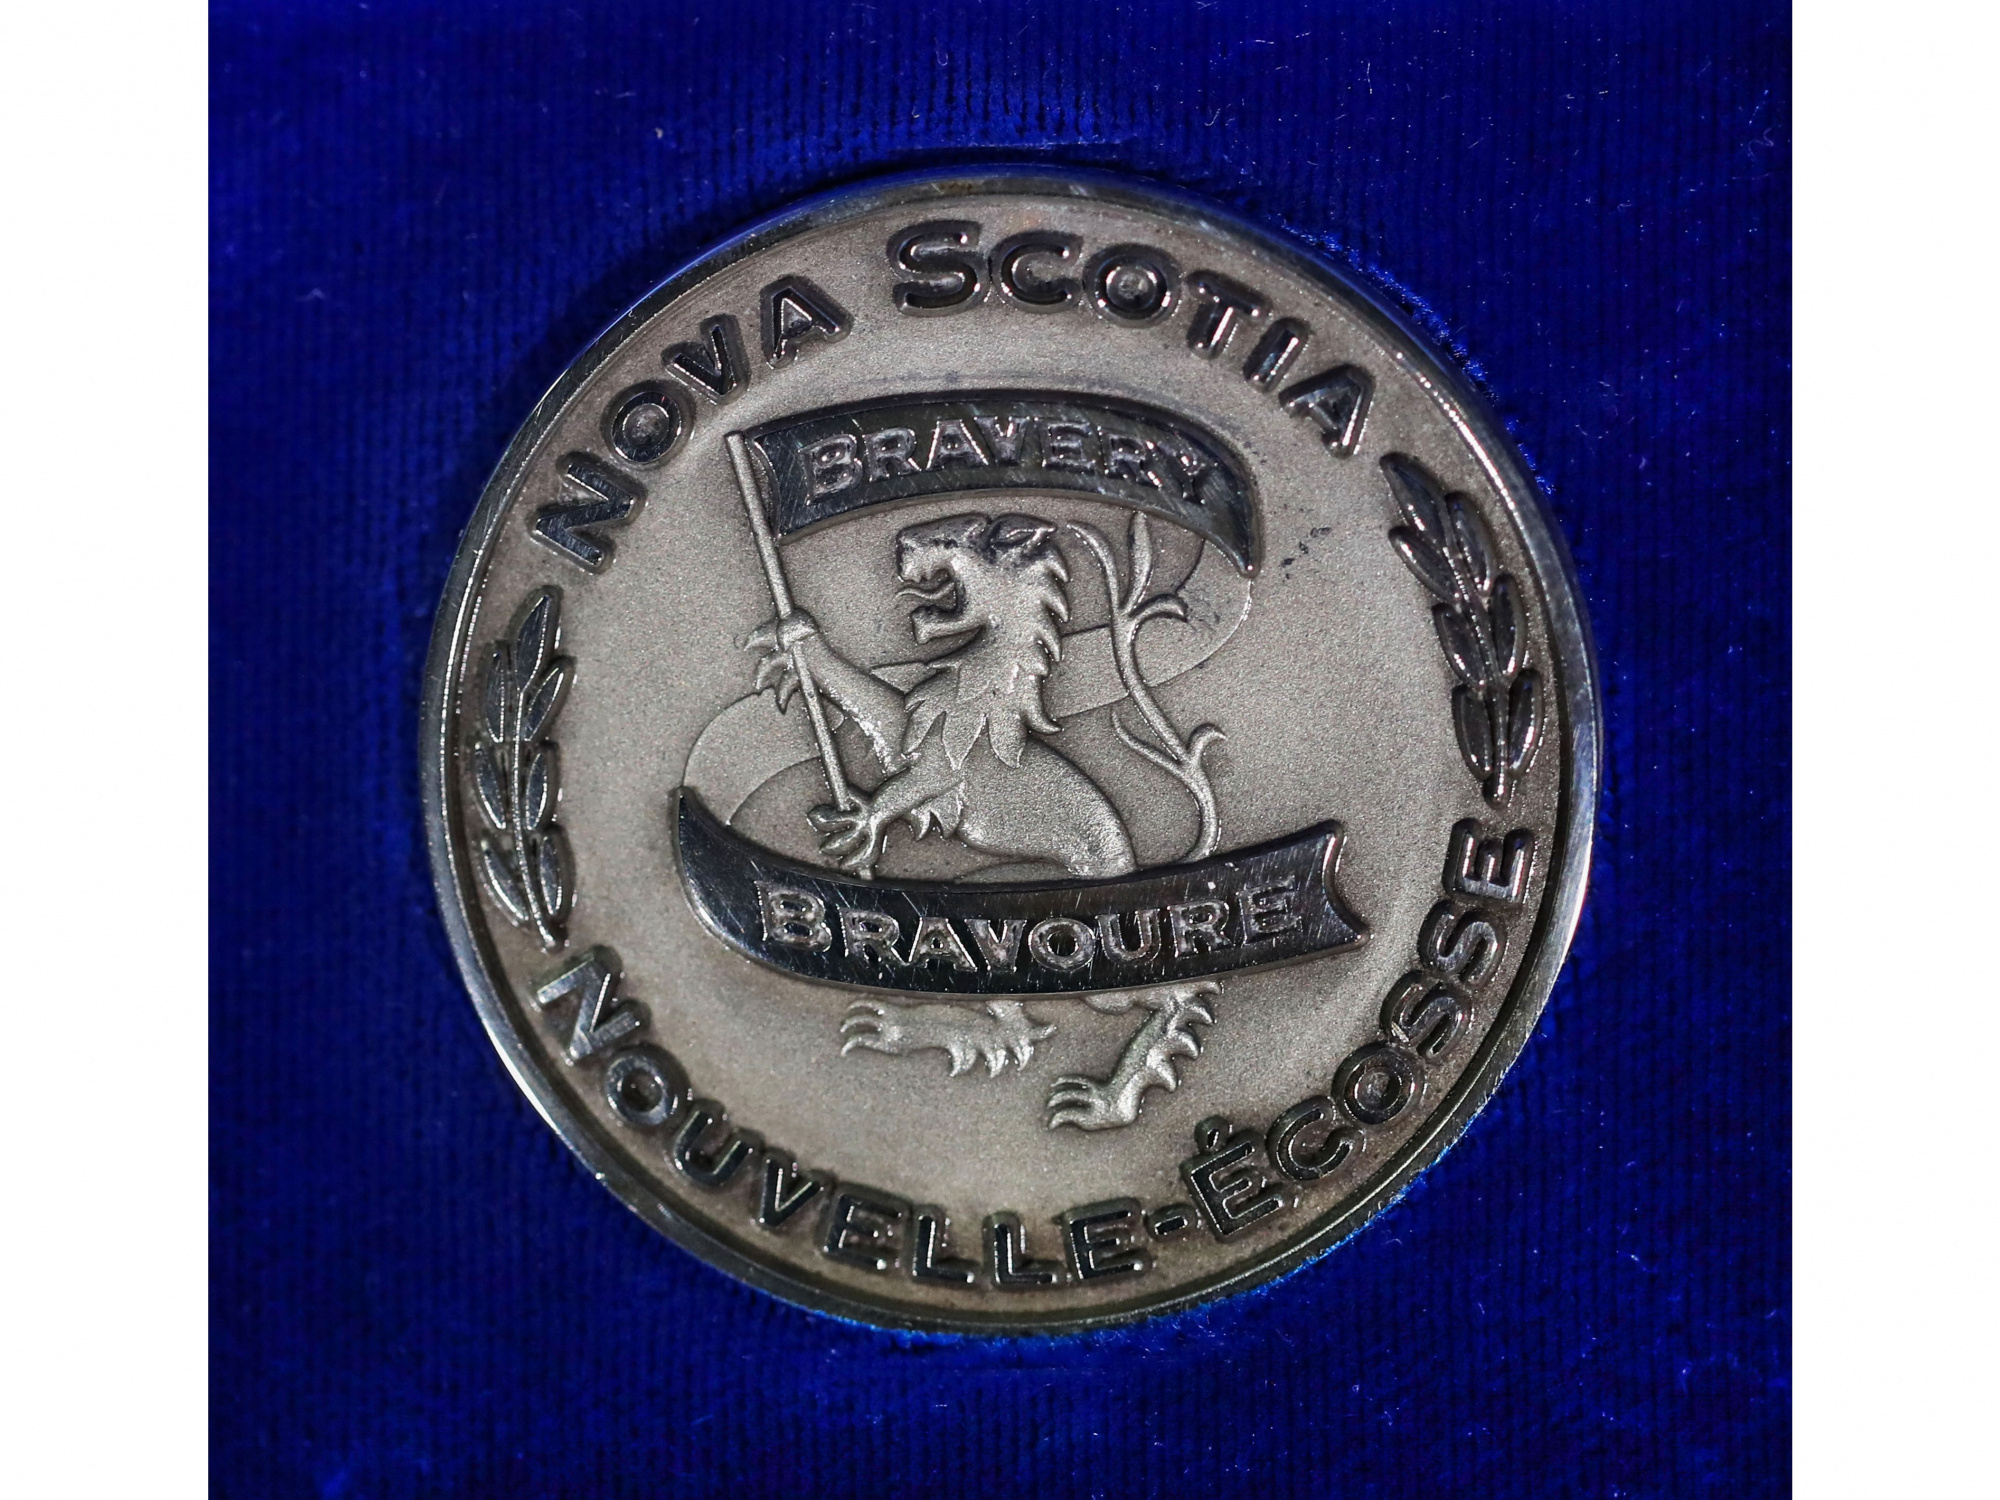 Photo of the Nova Scotia Medal of Bravery